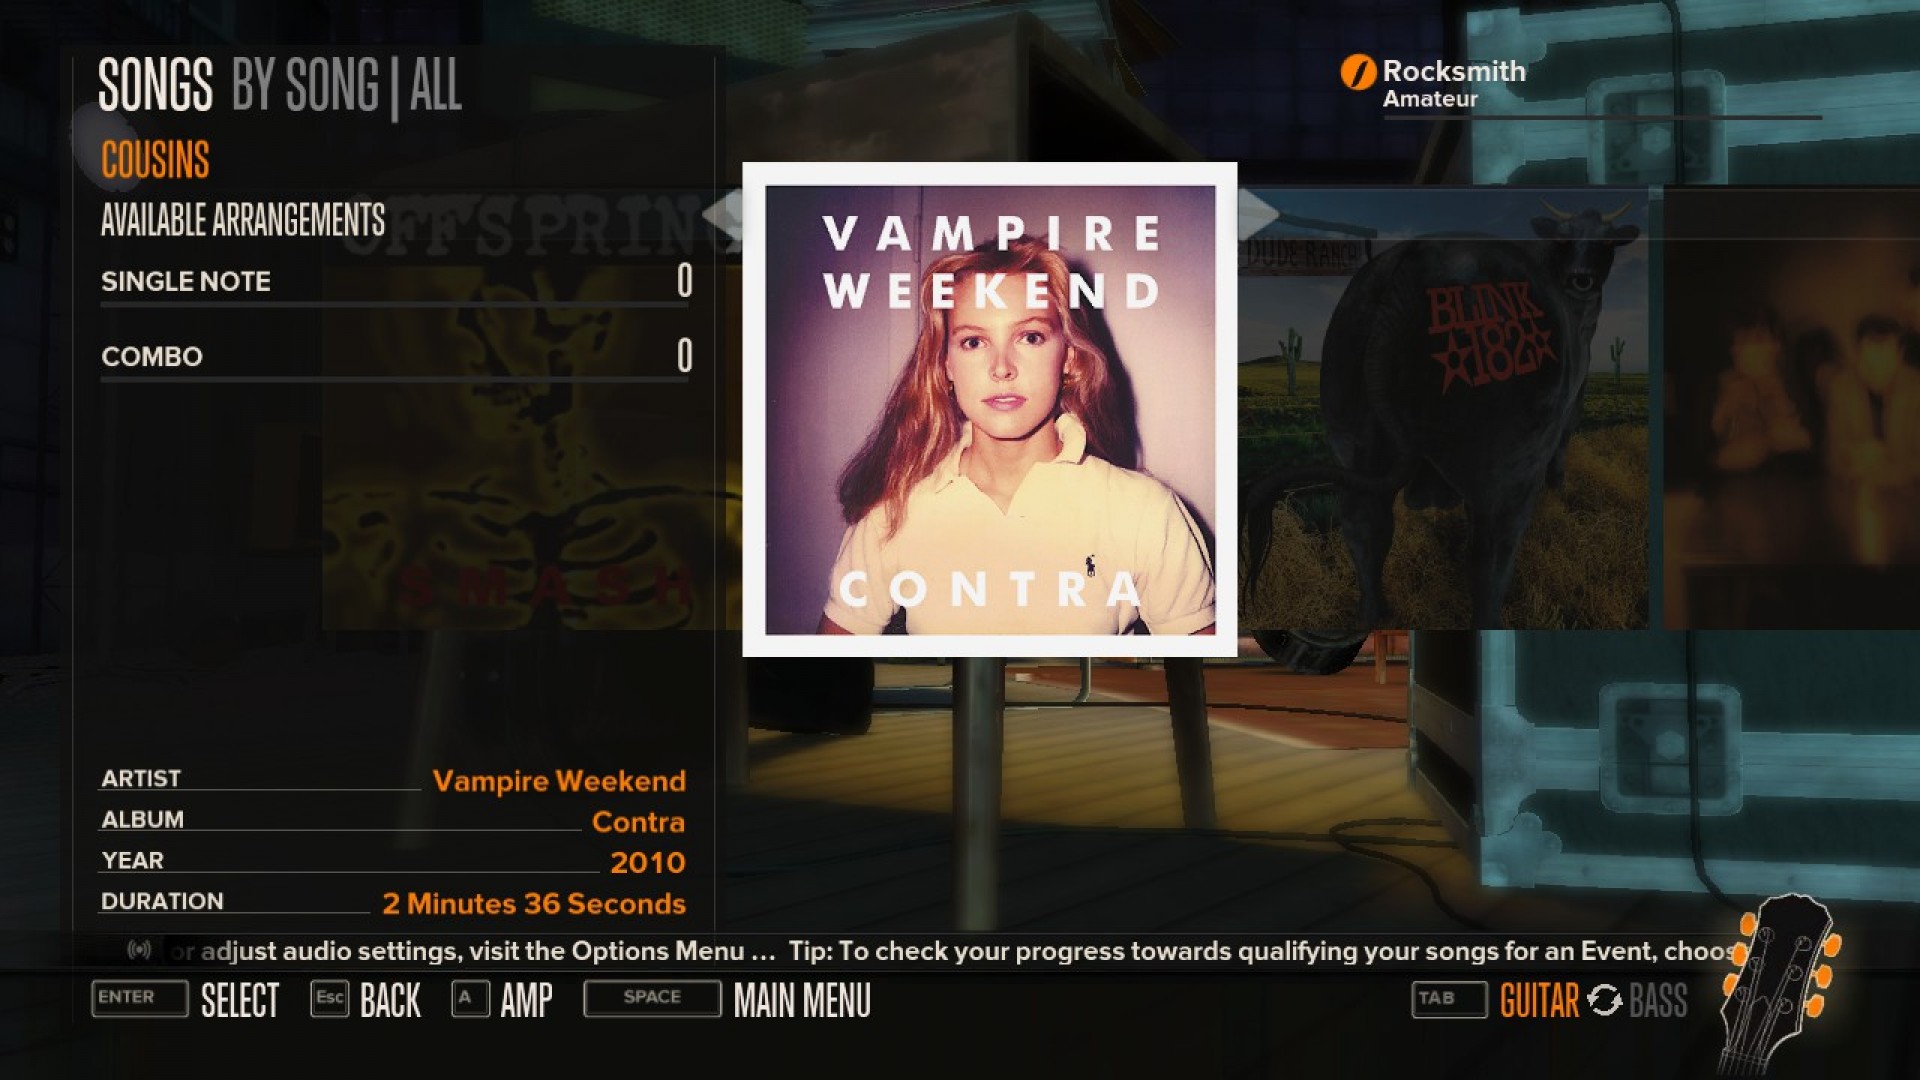 Rocksmith - Vampire Weekend - Cousins screenshot